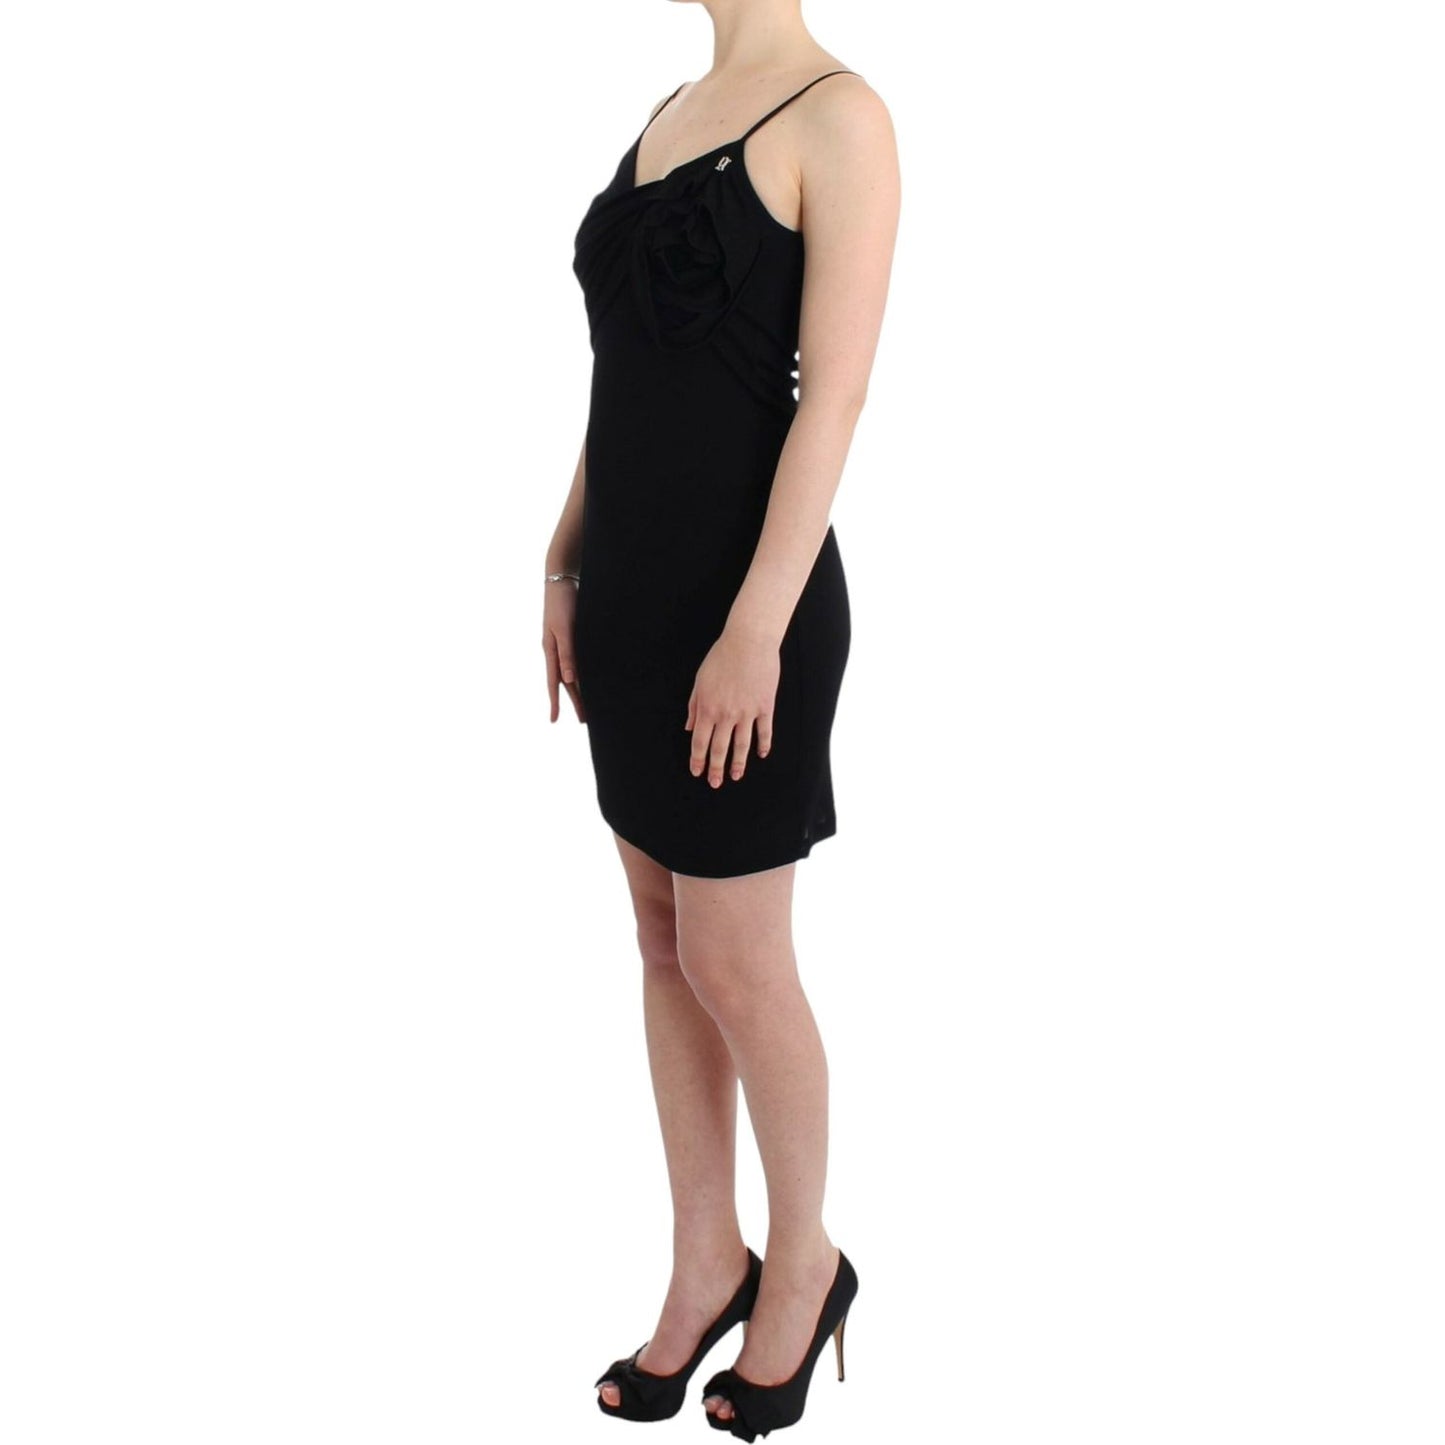 John Galliano Elegant Black Jersey Knee-Length Dress Dresses black-coctail-dress 6965-black-coctail-dress-1-scaled-7f8d5cd6-460.jpg